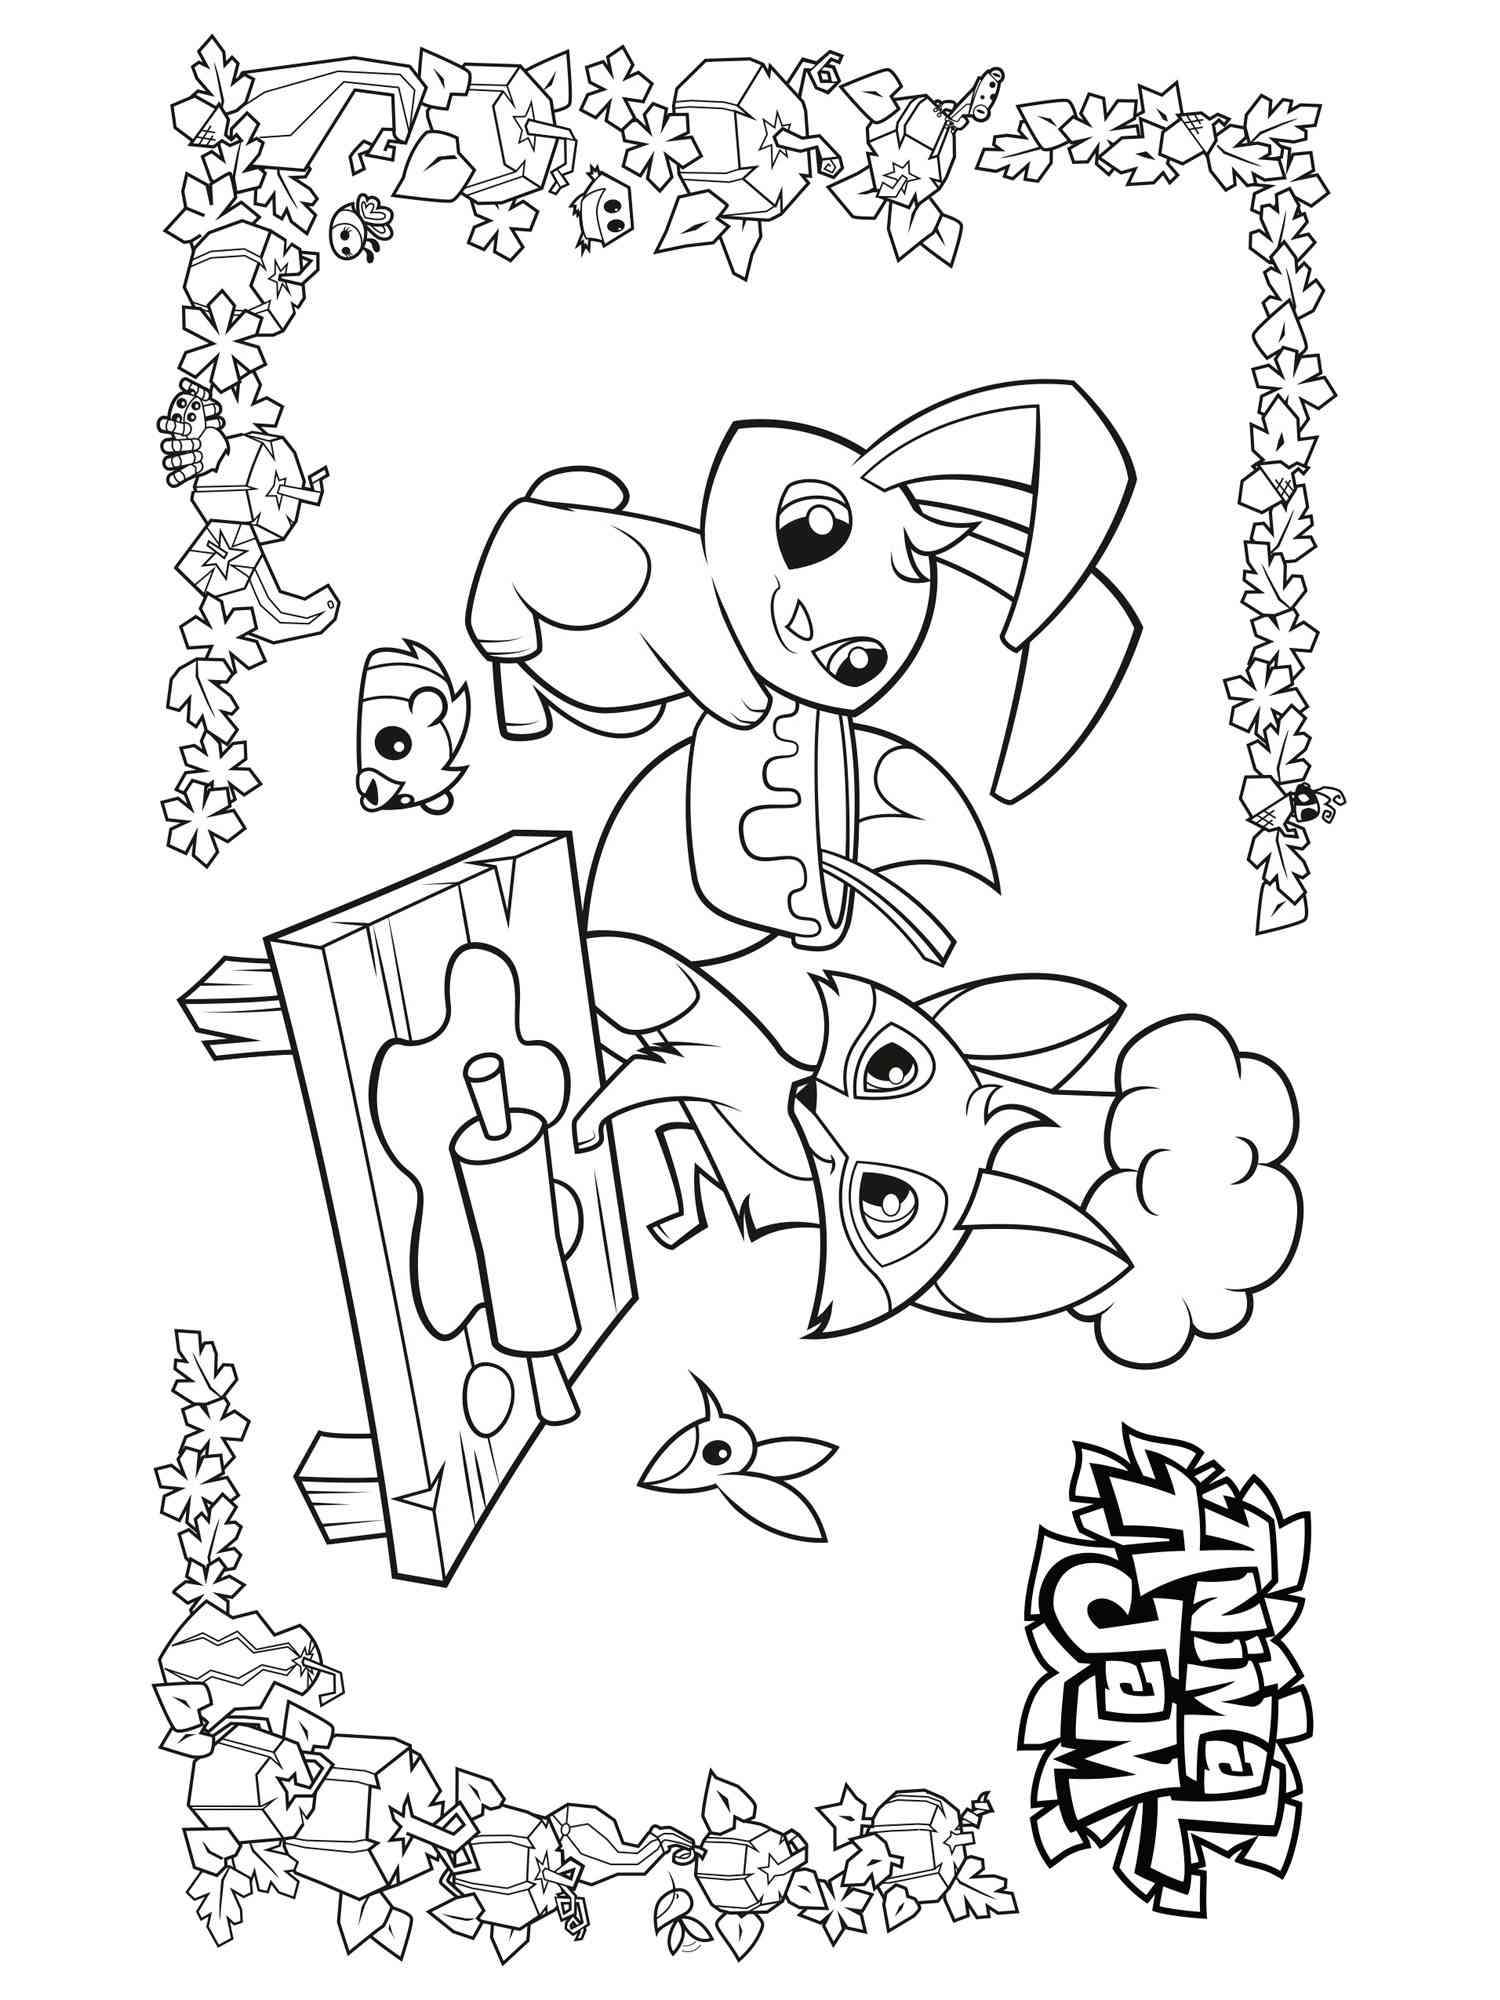 Fox and Bunny Animal Jam coloring page